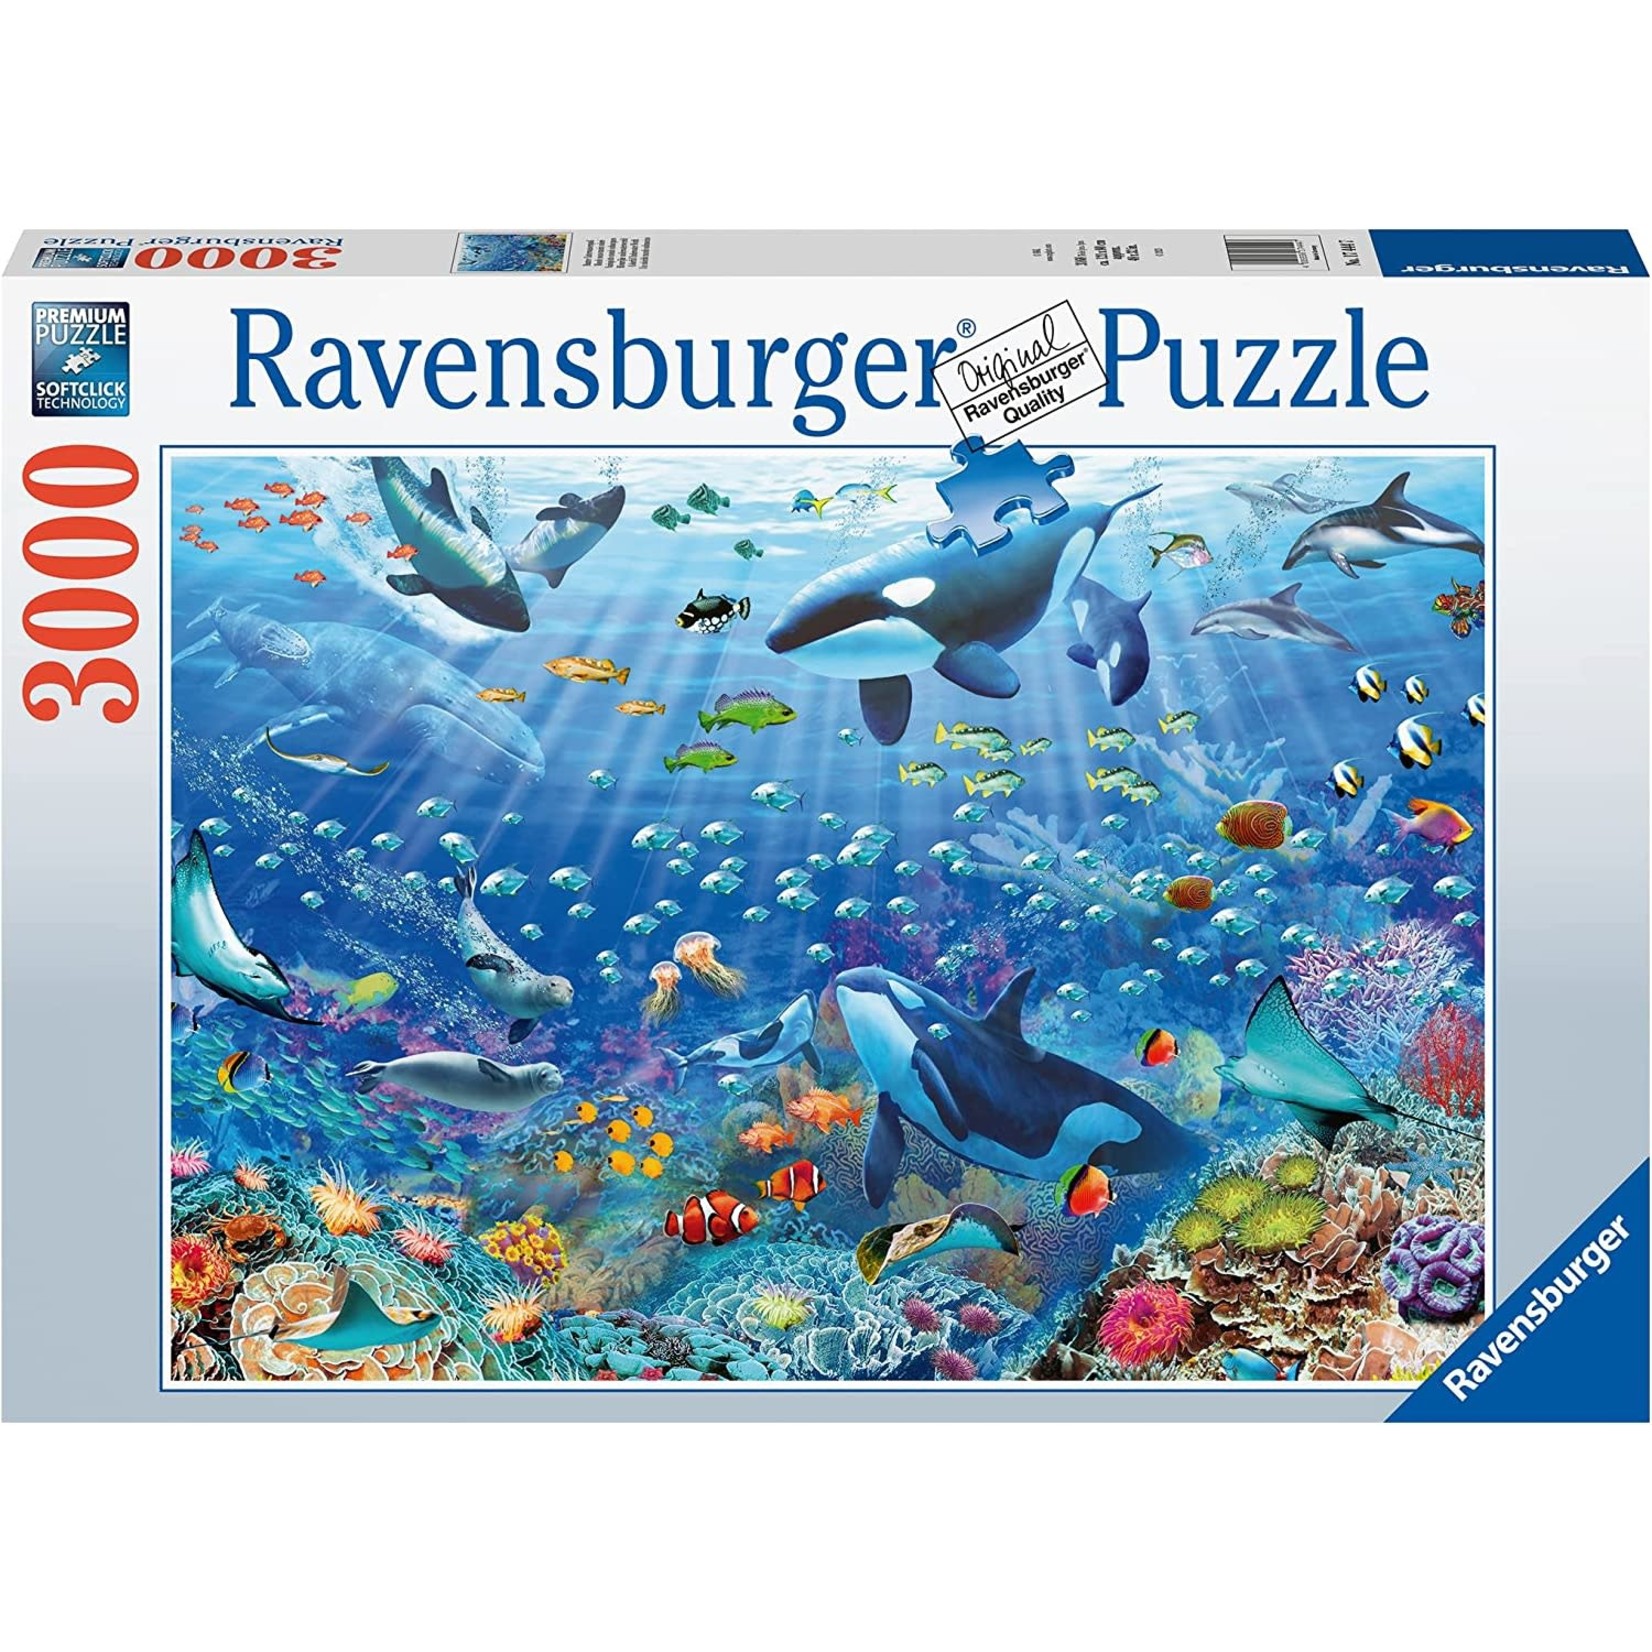 Ravensburger Colorful Underwater World